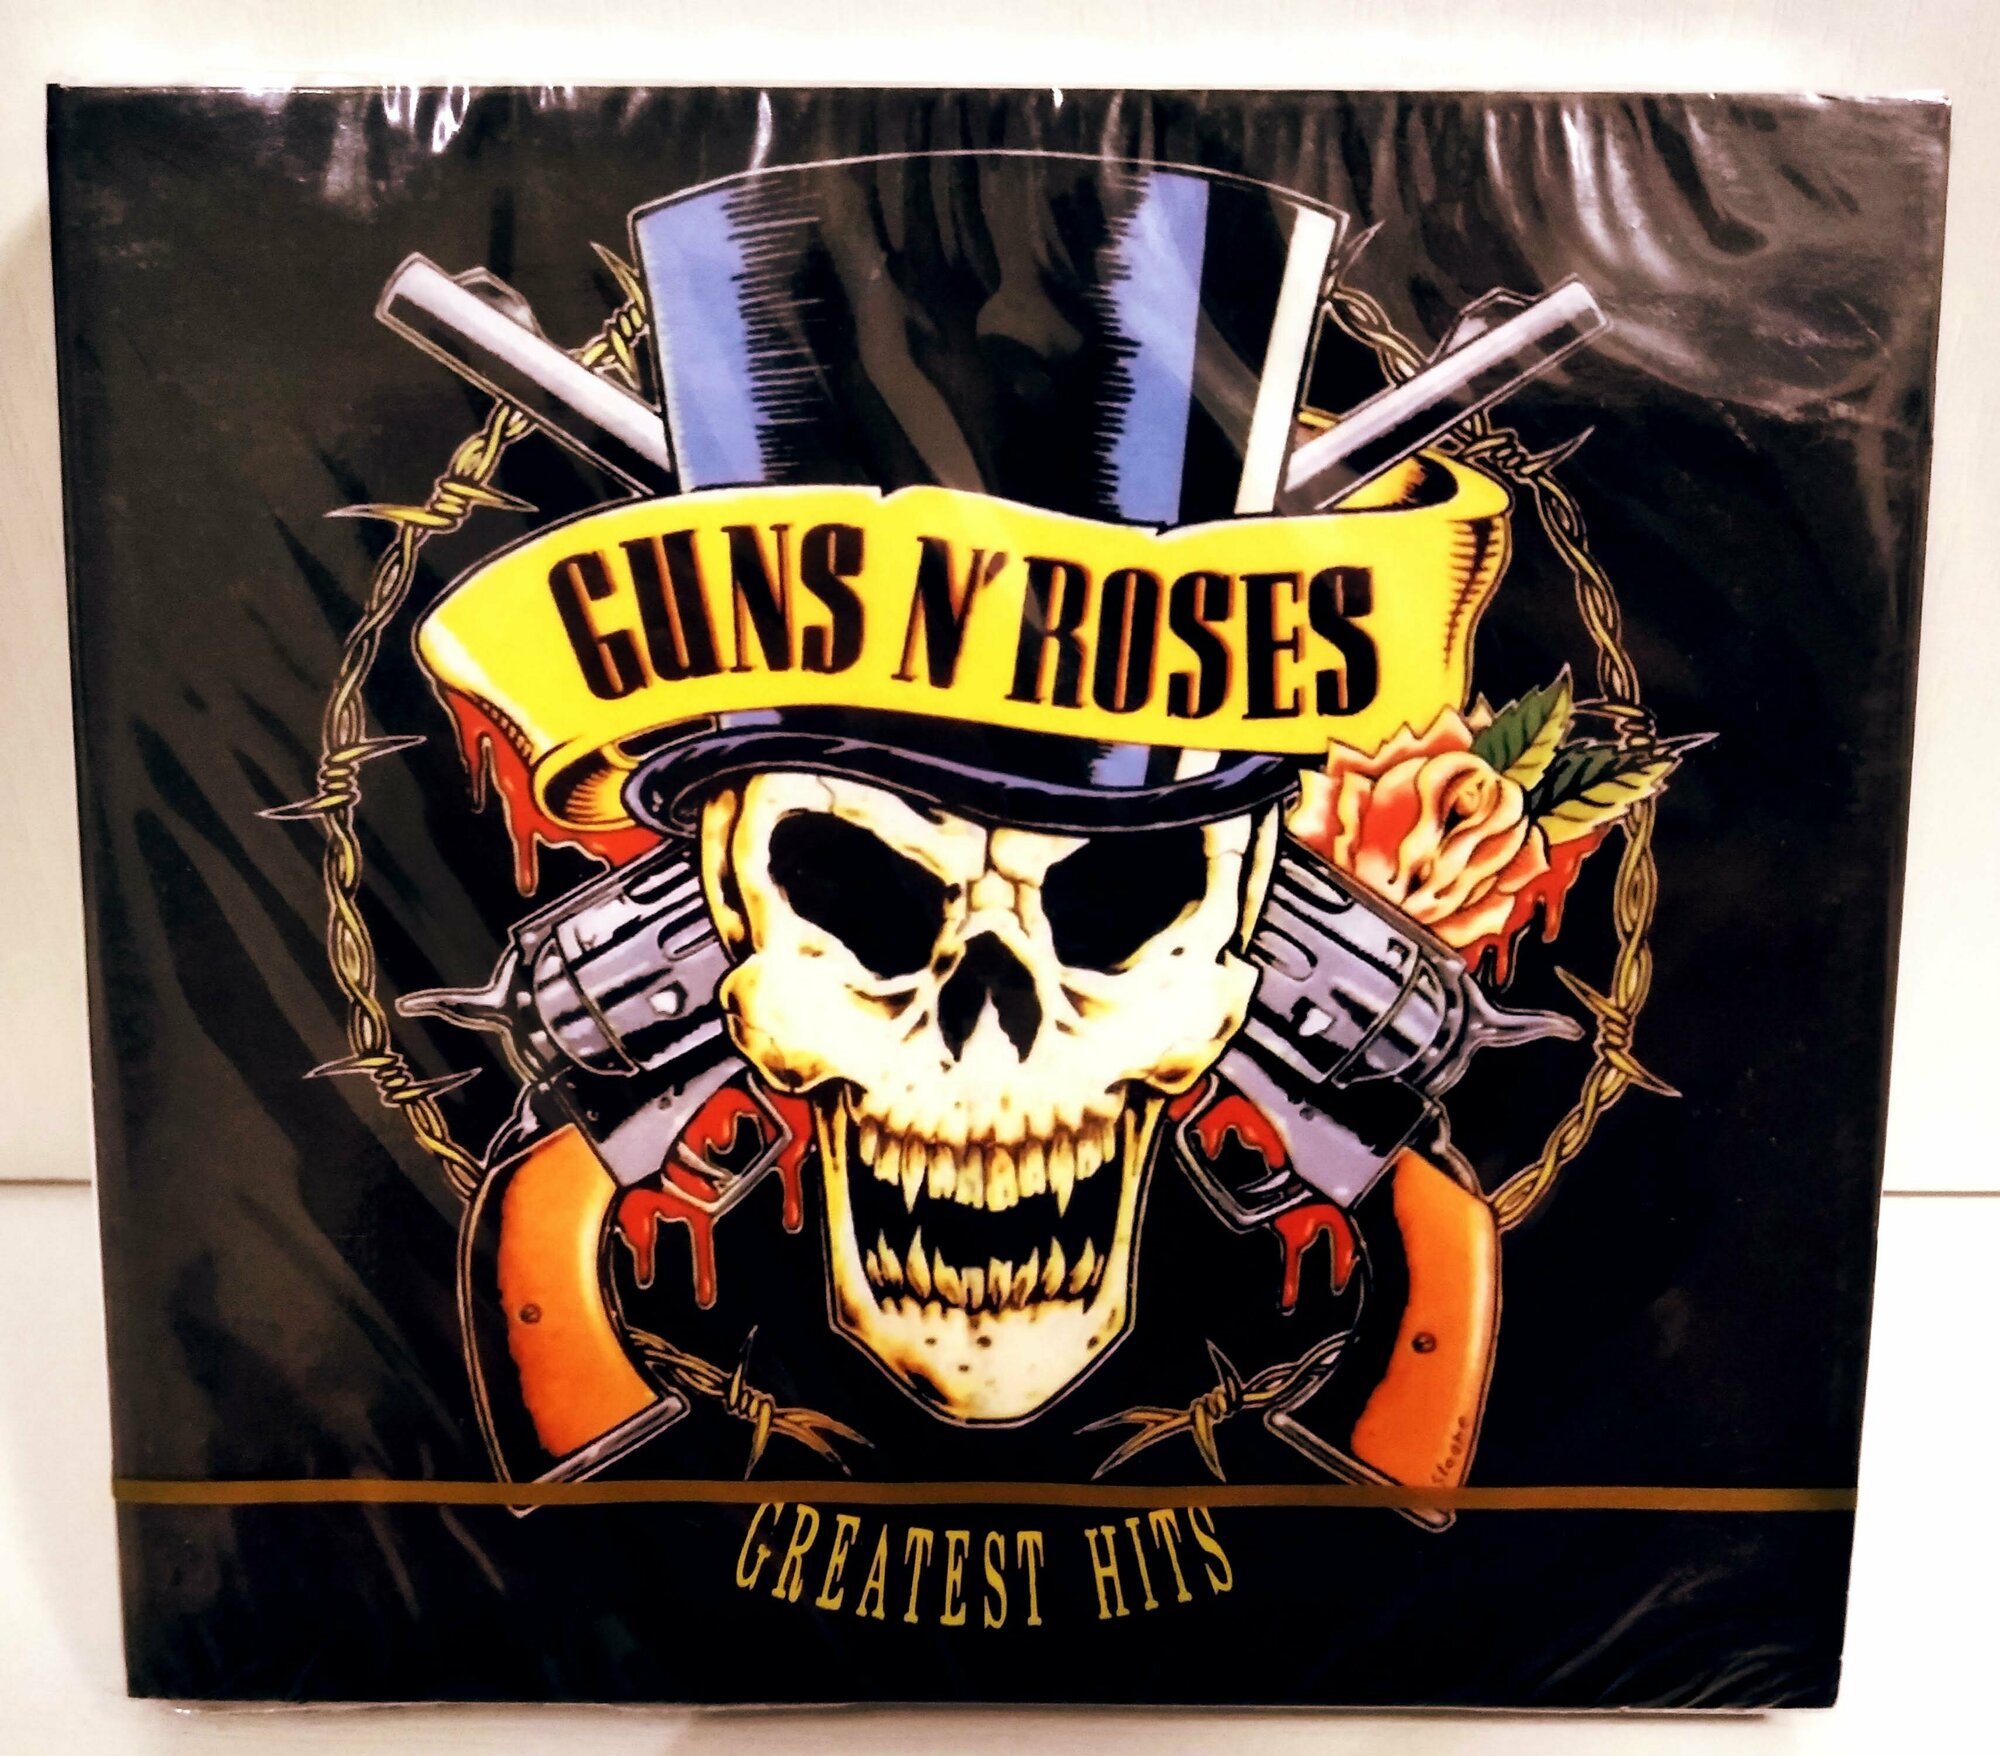 GUNS N'ROSES "Greatest Hits" 2 CD